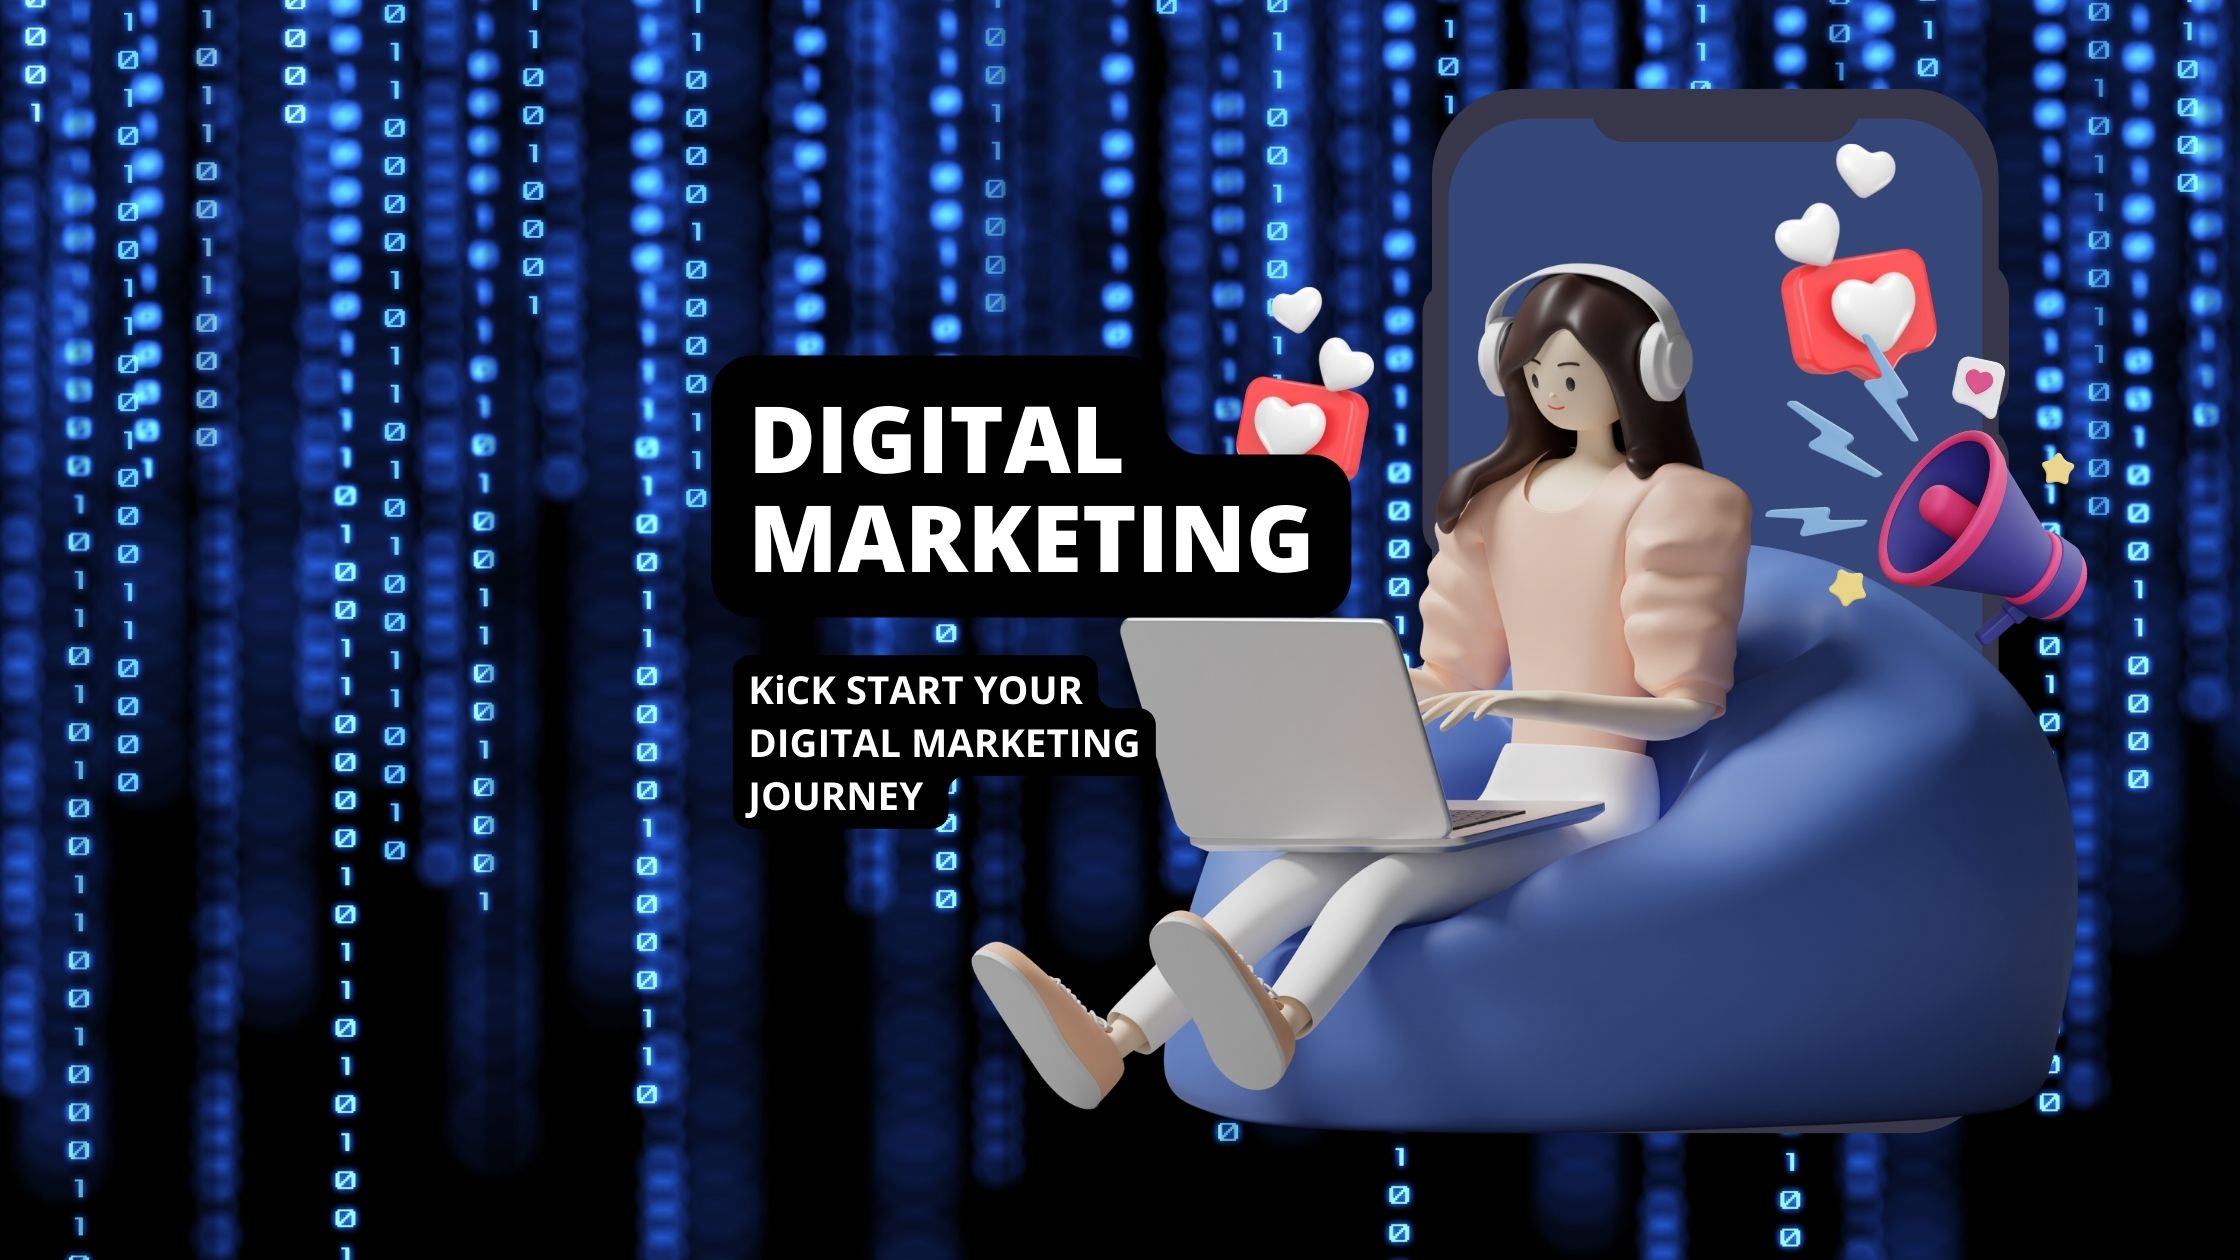 Kick start your digital marketing journey - Shaik Yaseen